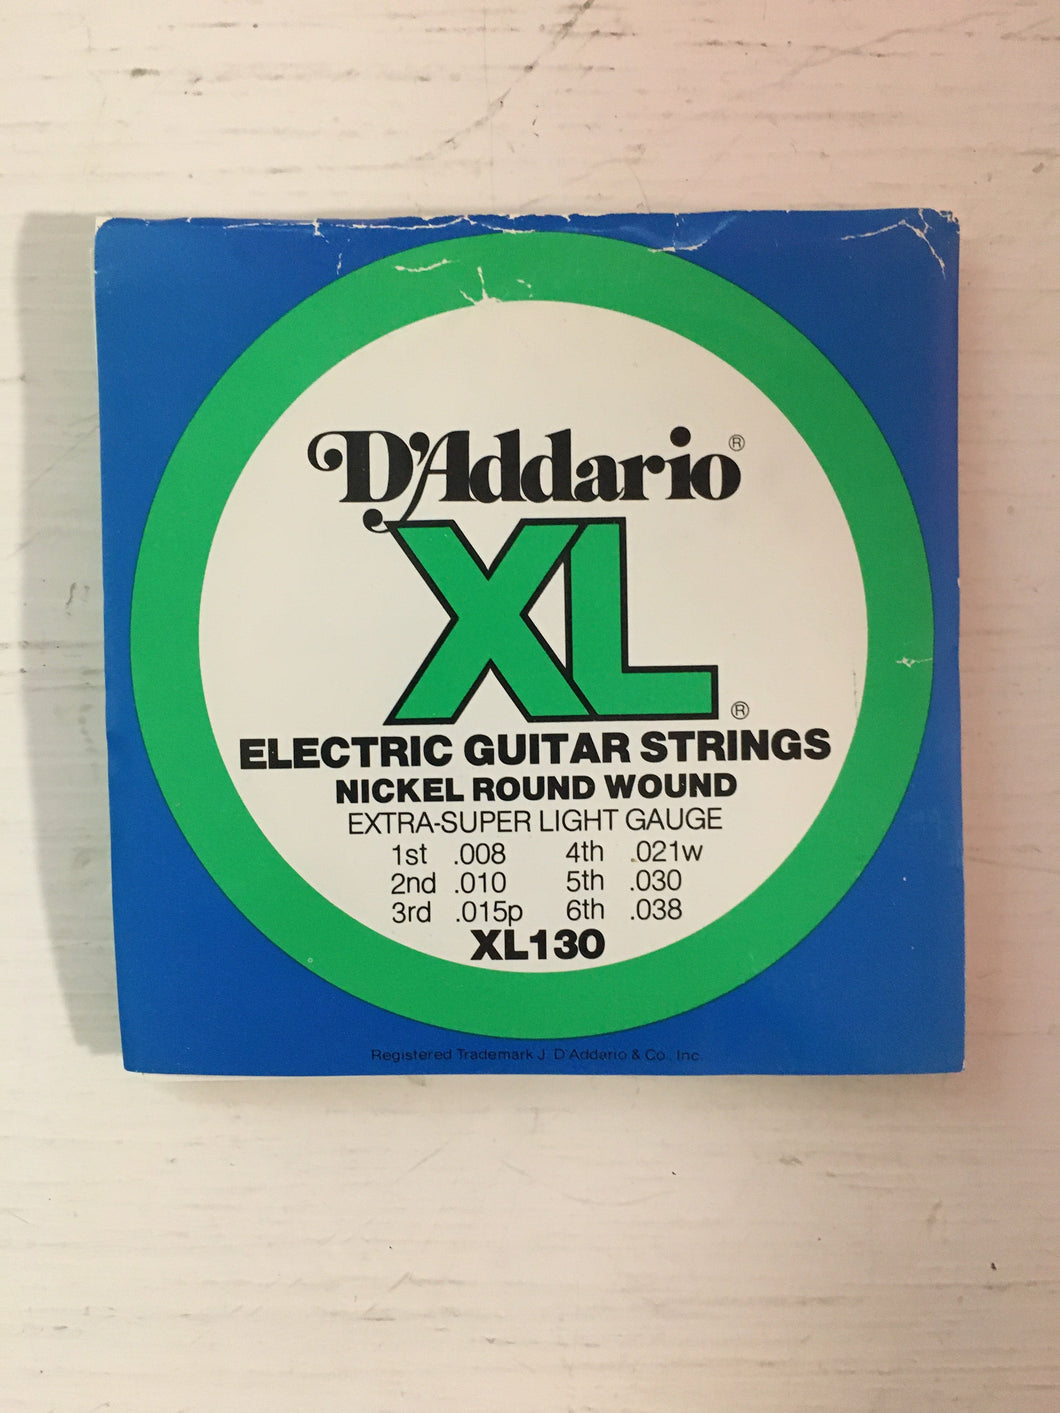 Electric Single Strings - D'Addario XL130 G String